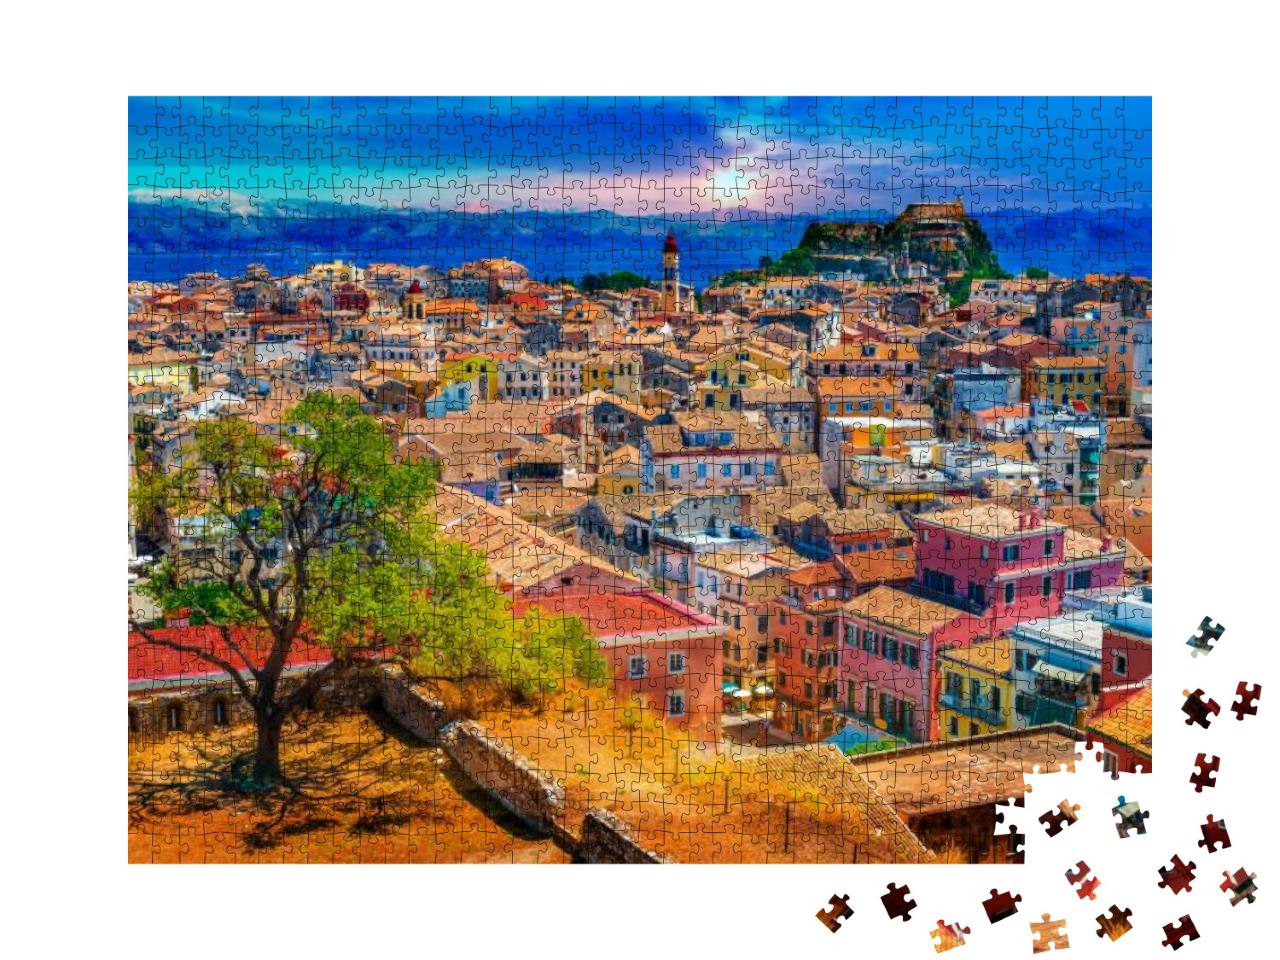 Panoramic View of Kerkyra, Capital of Corfu Island, Greec... Jigsaw Puzzle with 1000 pieces